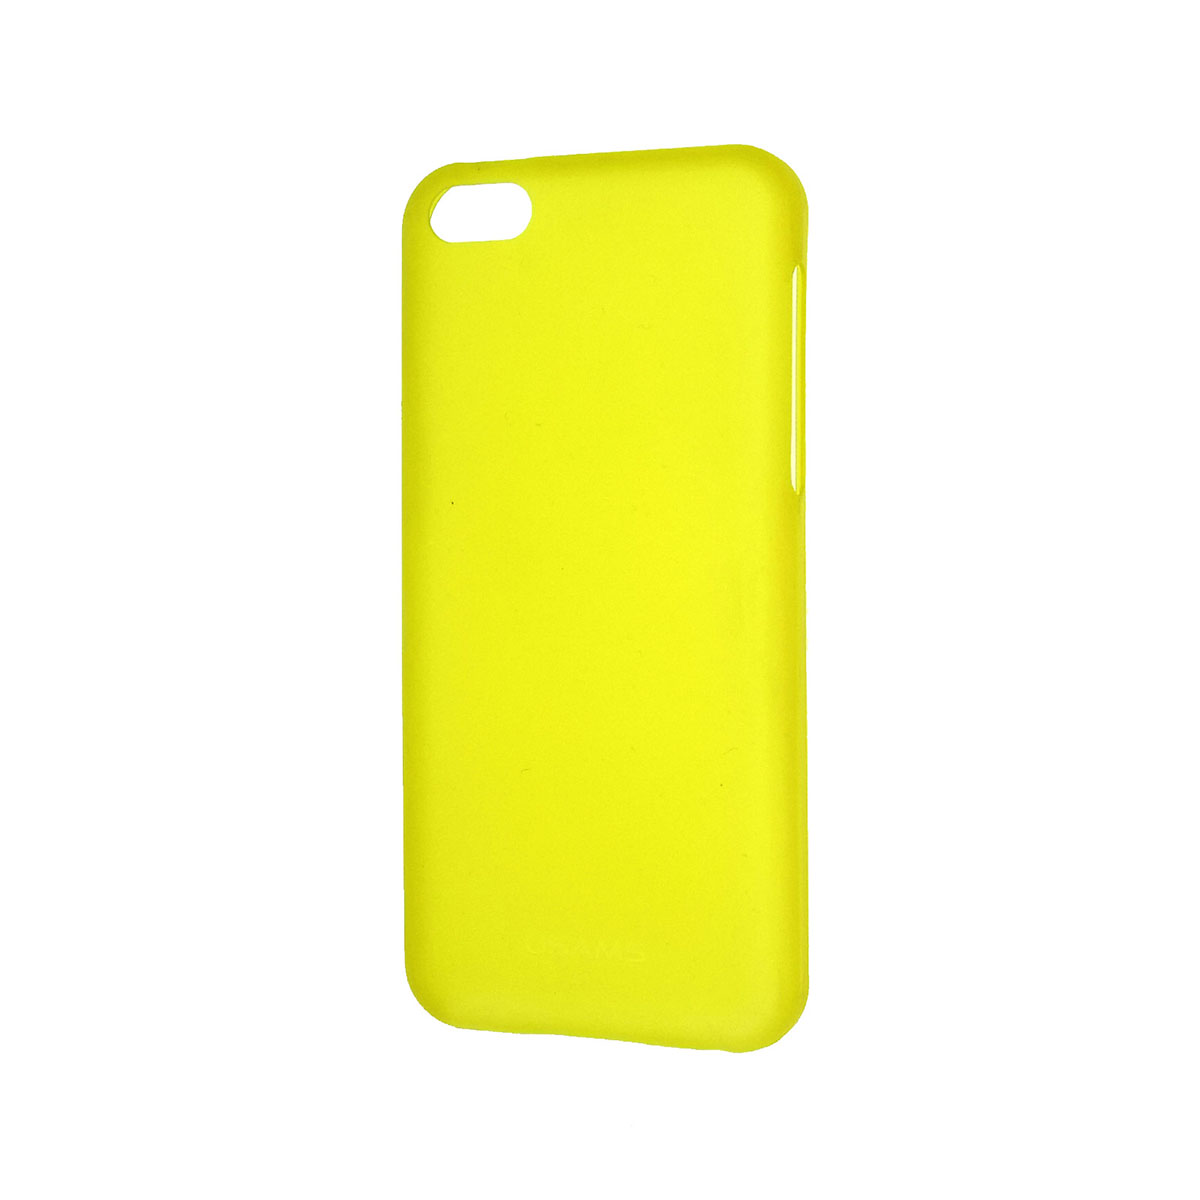 Чехол накладка USAMS для APPLE iPhone 5C, силикон, цвет желтый.